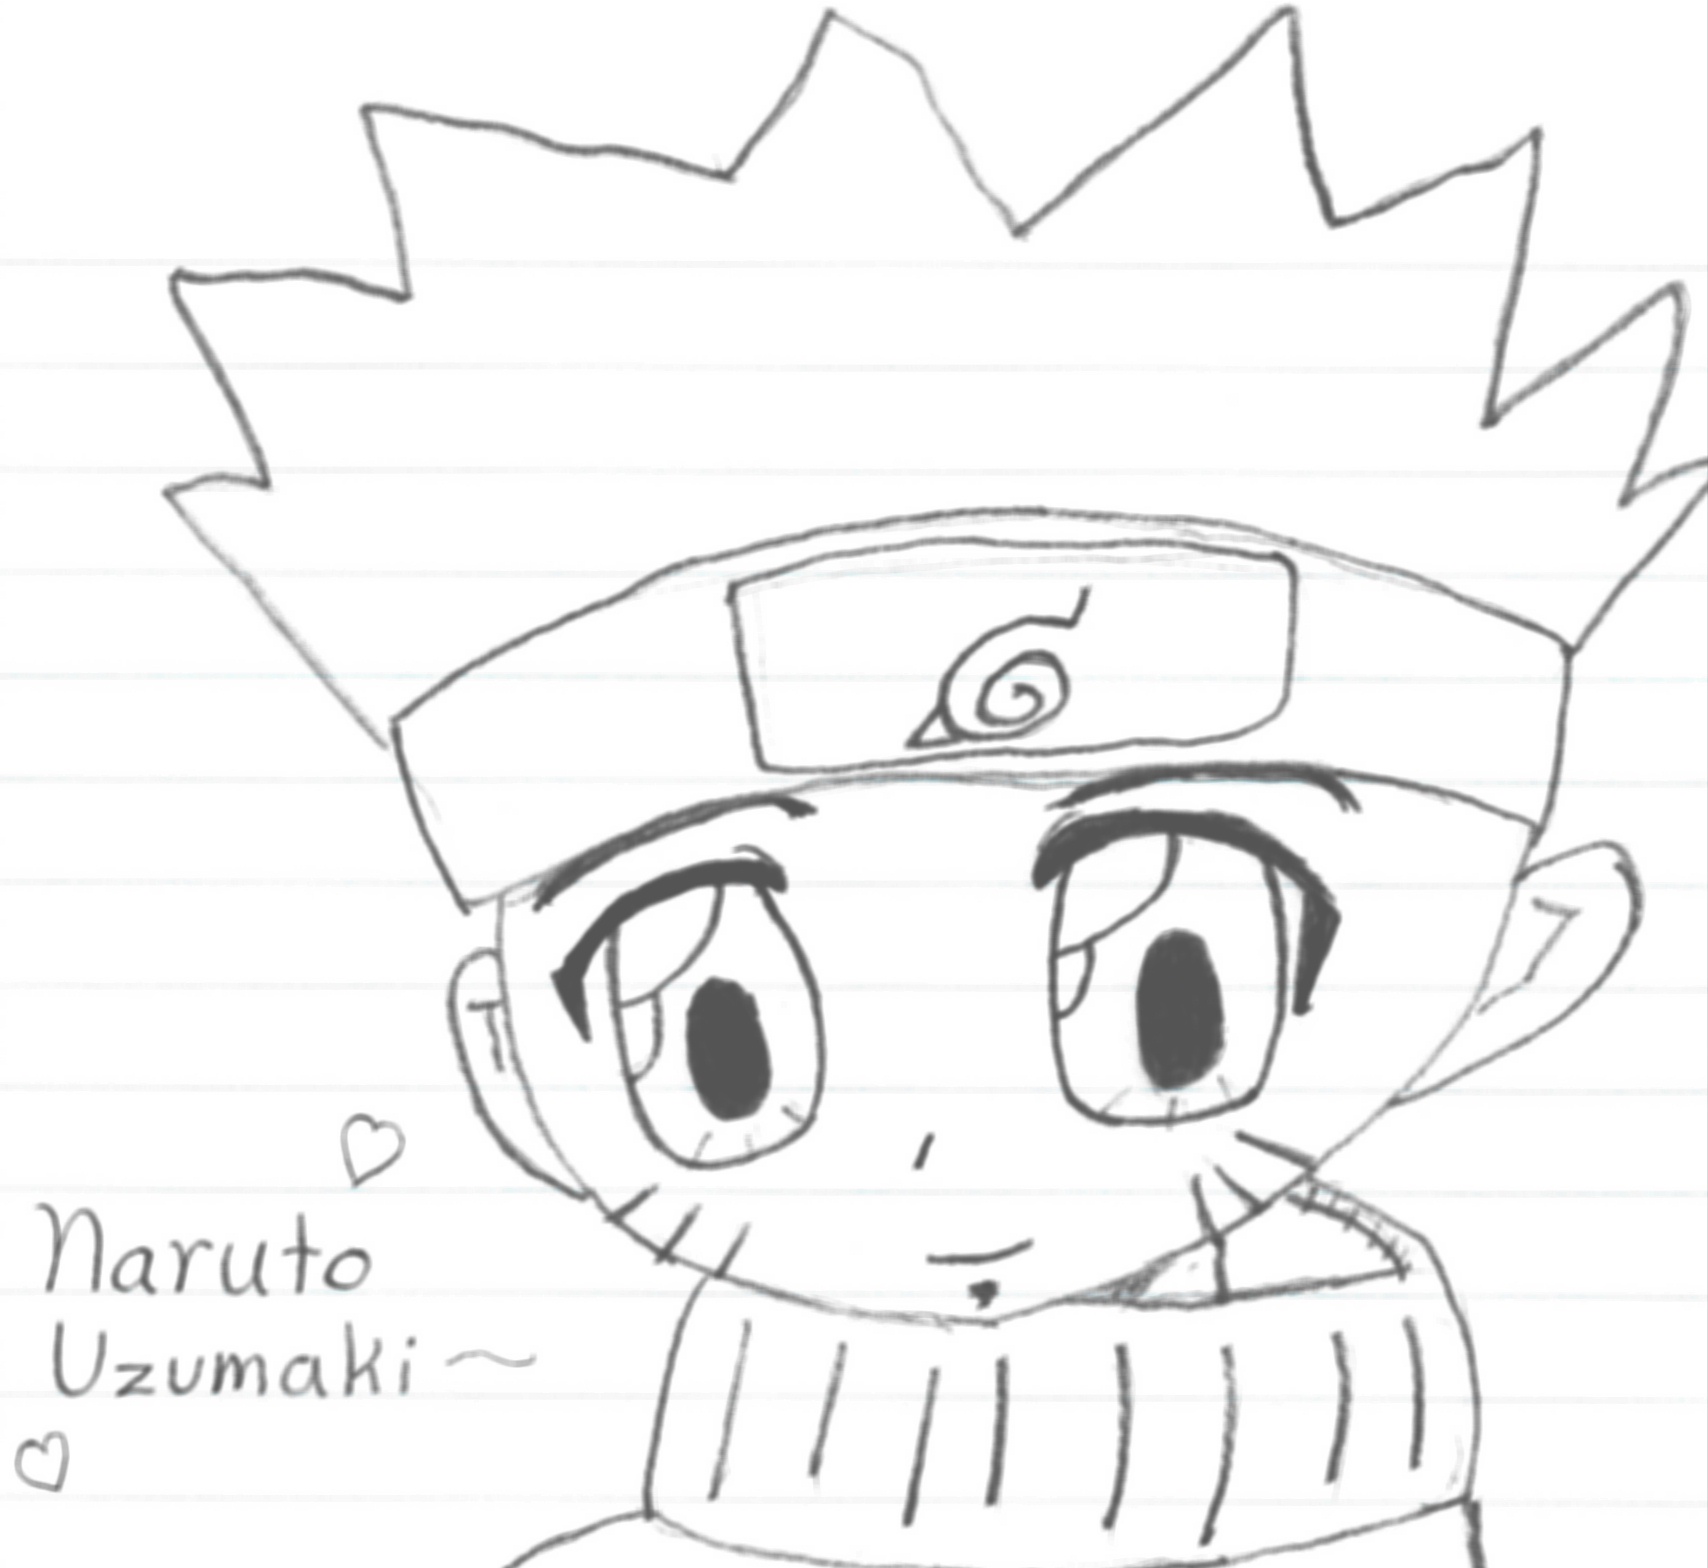 Chibi Naruto by Mythical_fox